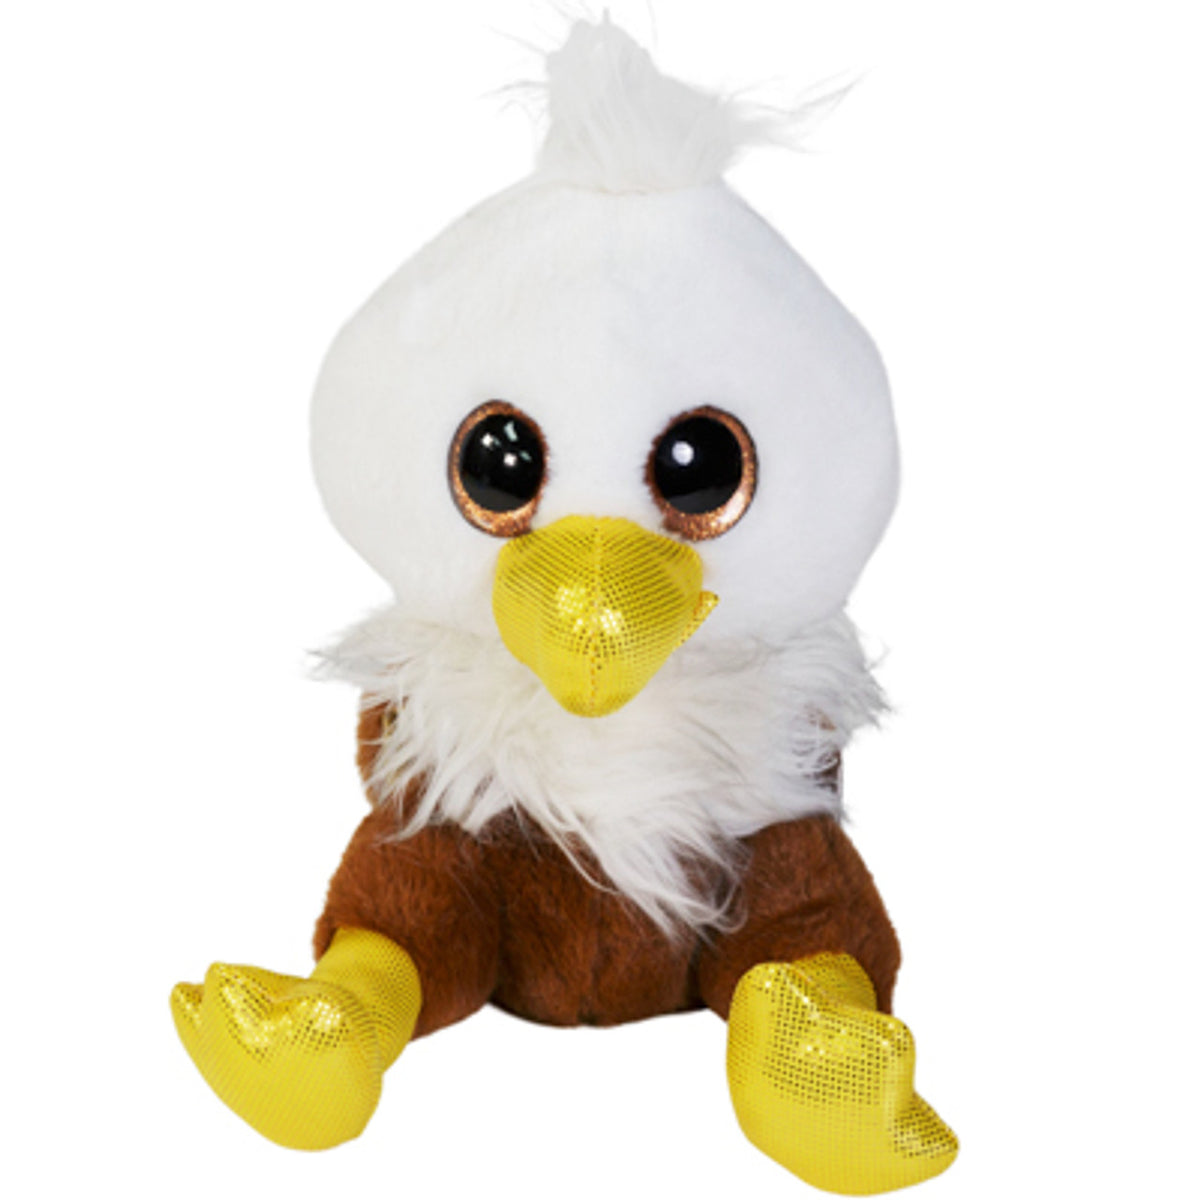 9" Wishpets American Eagle Plush Toy - Patriotic & Cute!